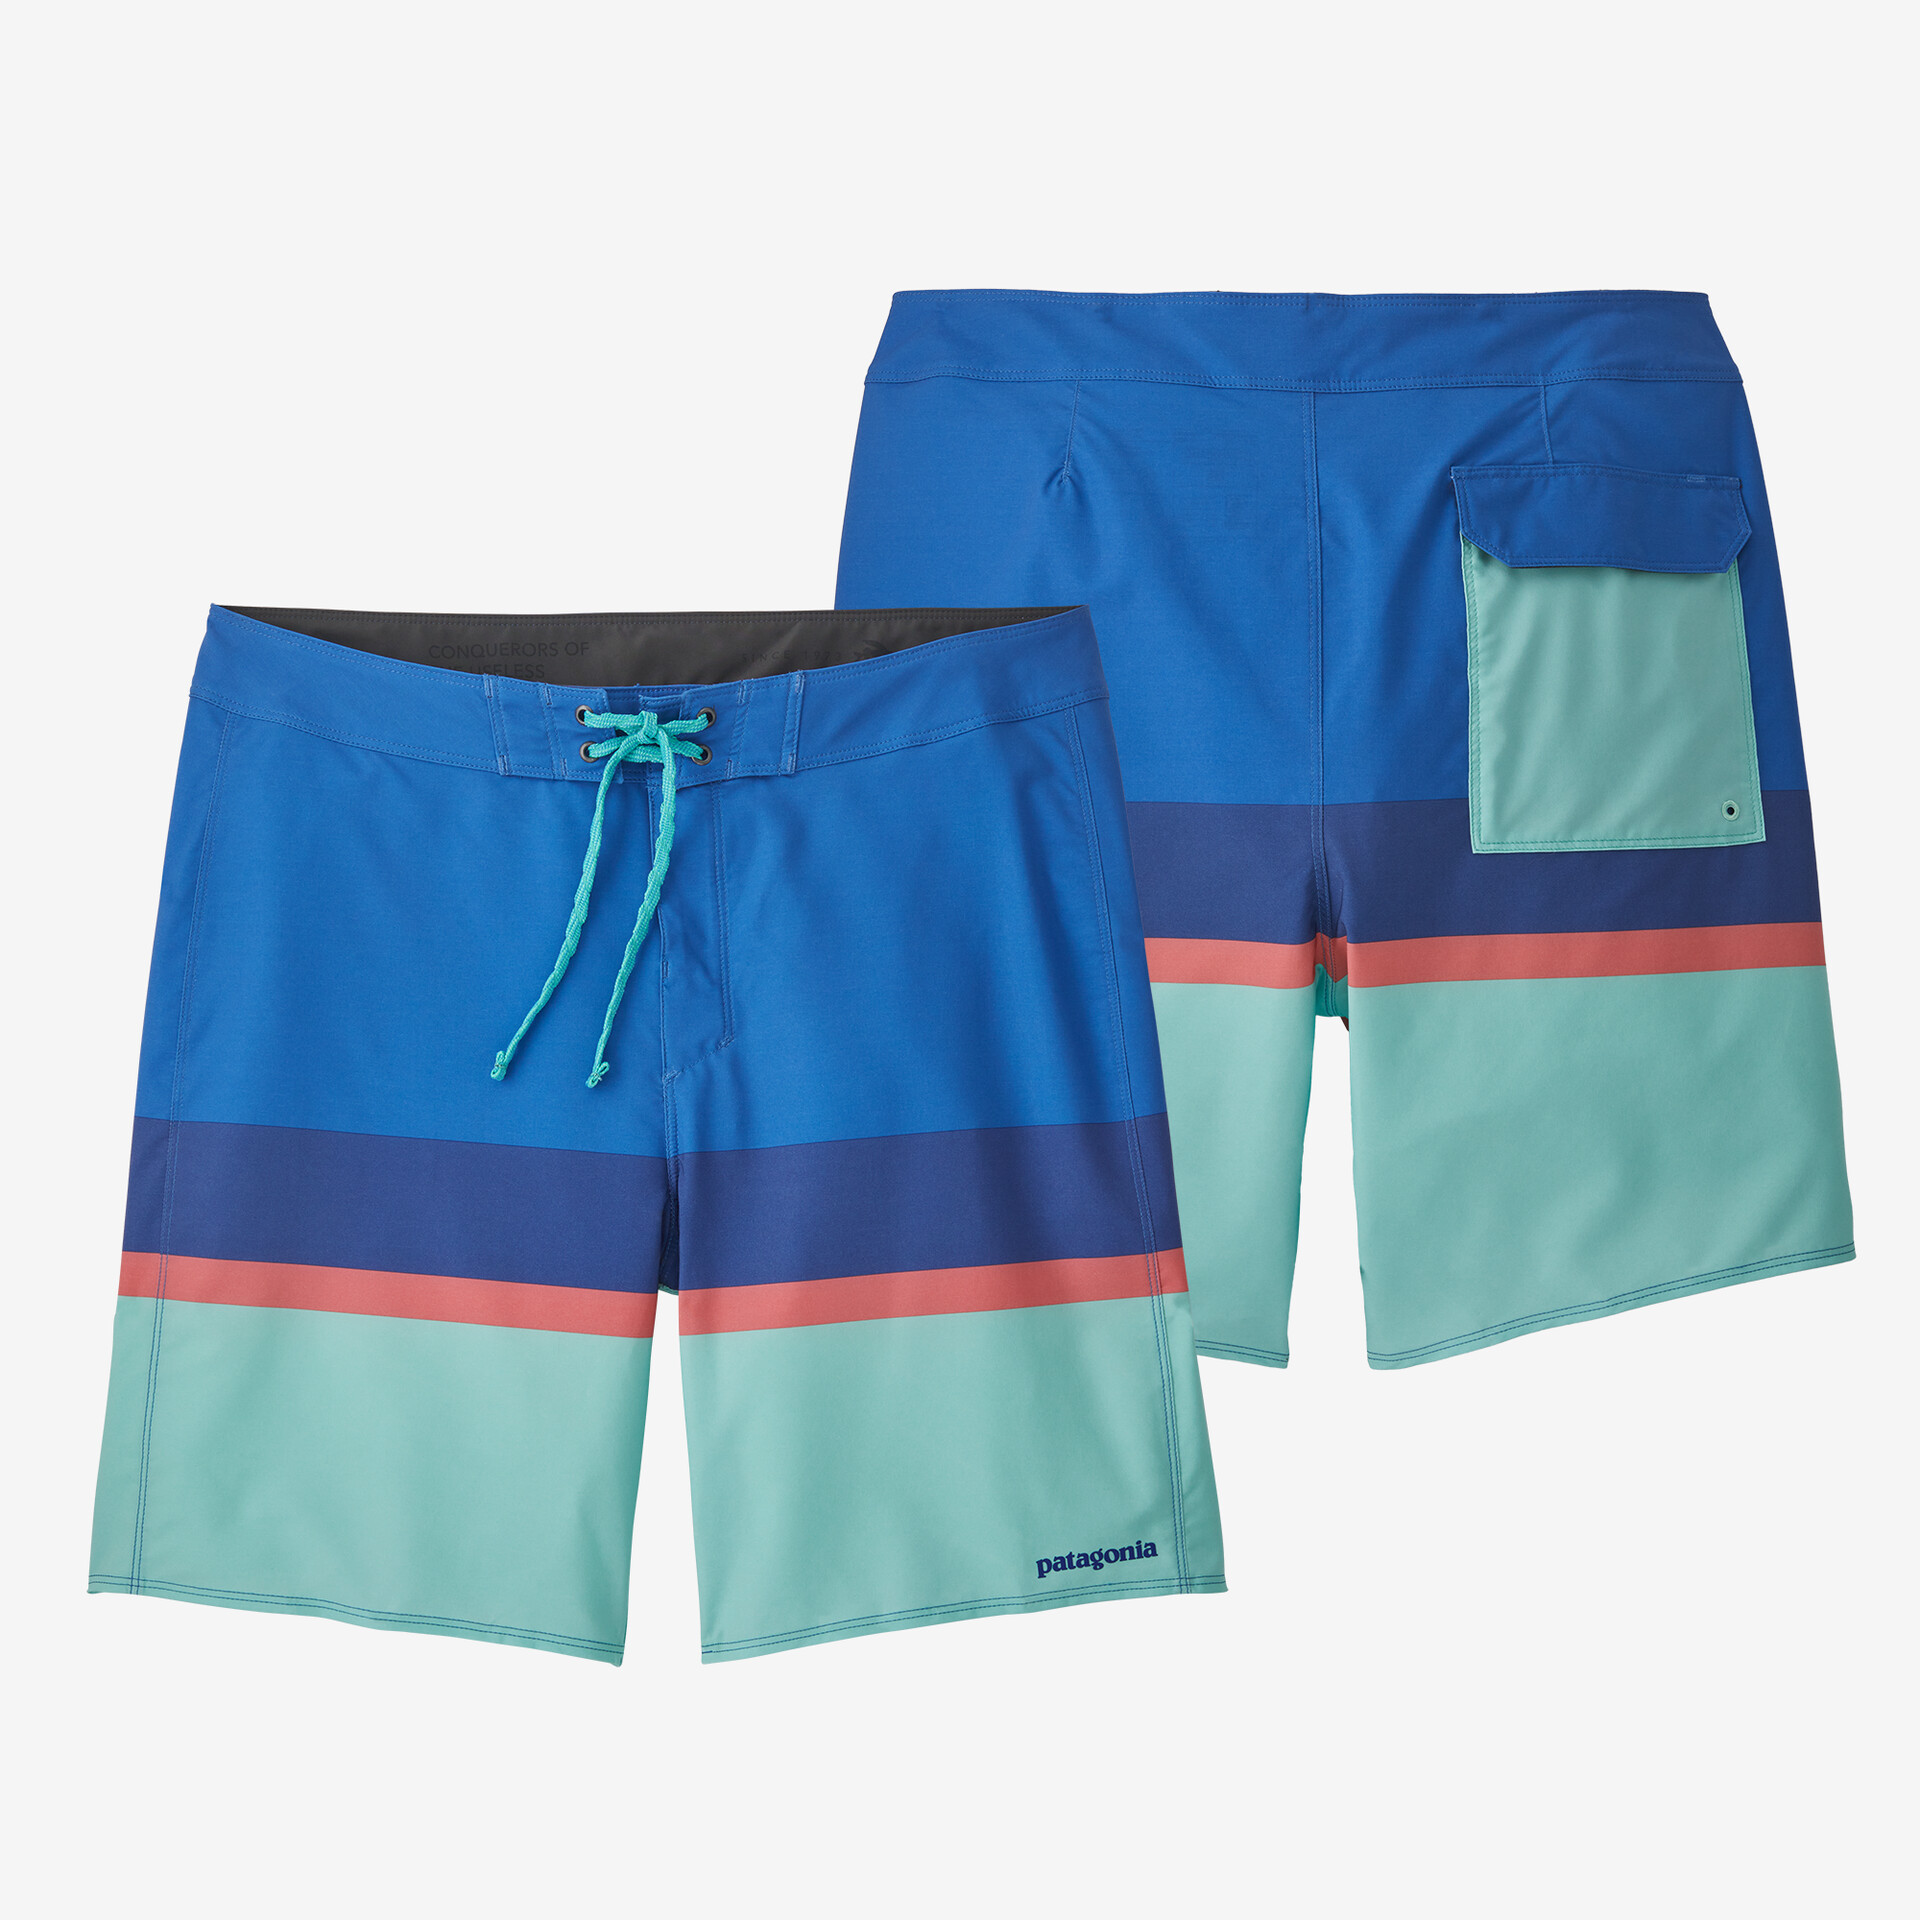 Мужские шорты для доски Hydropeak Patagonia, цвет Topa Stripe: Early Teal